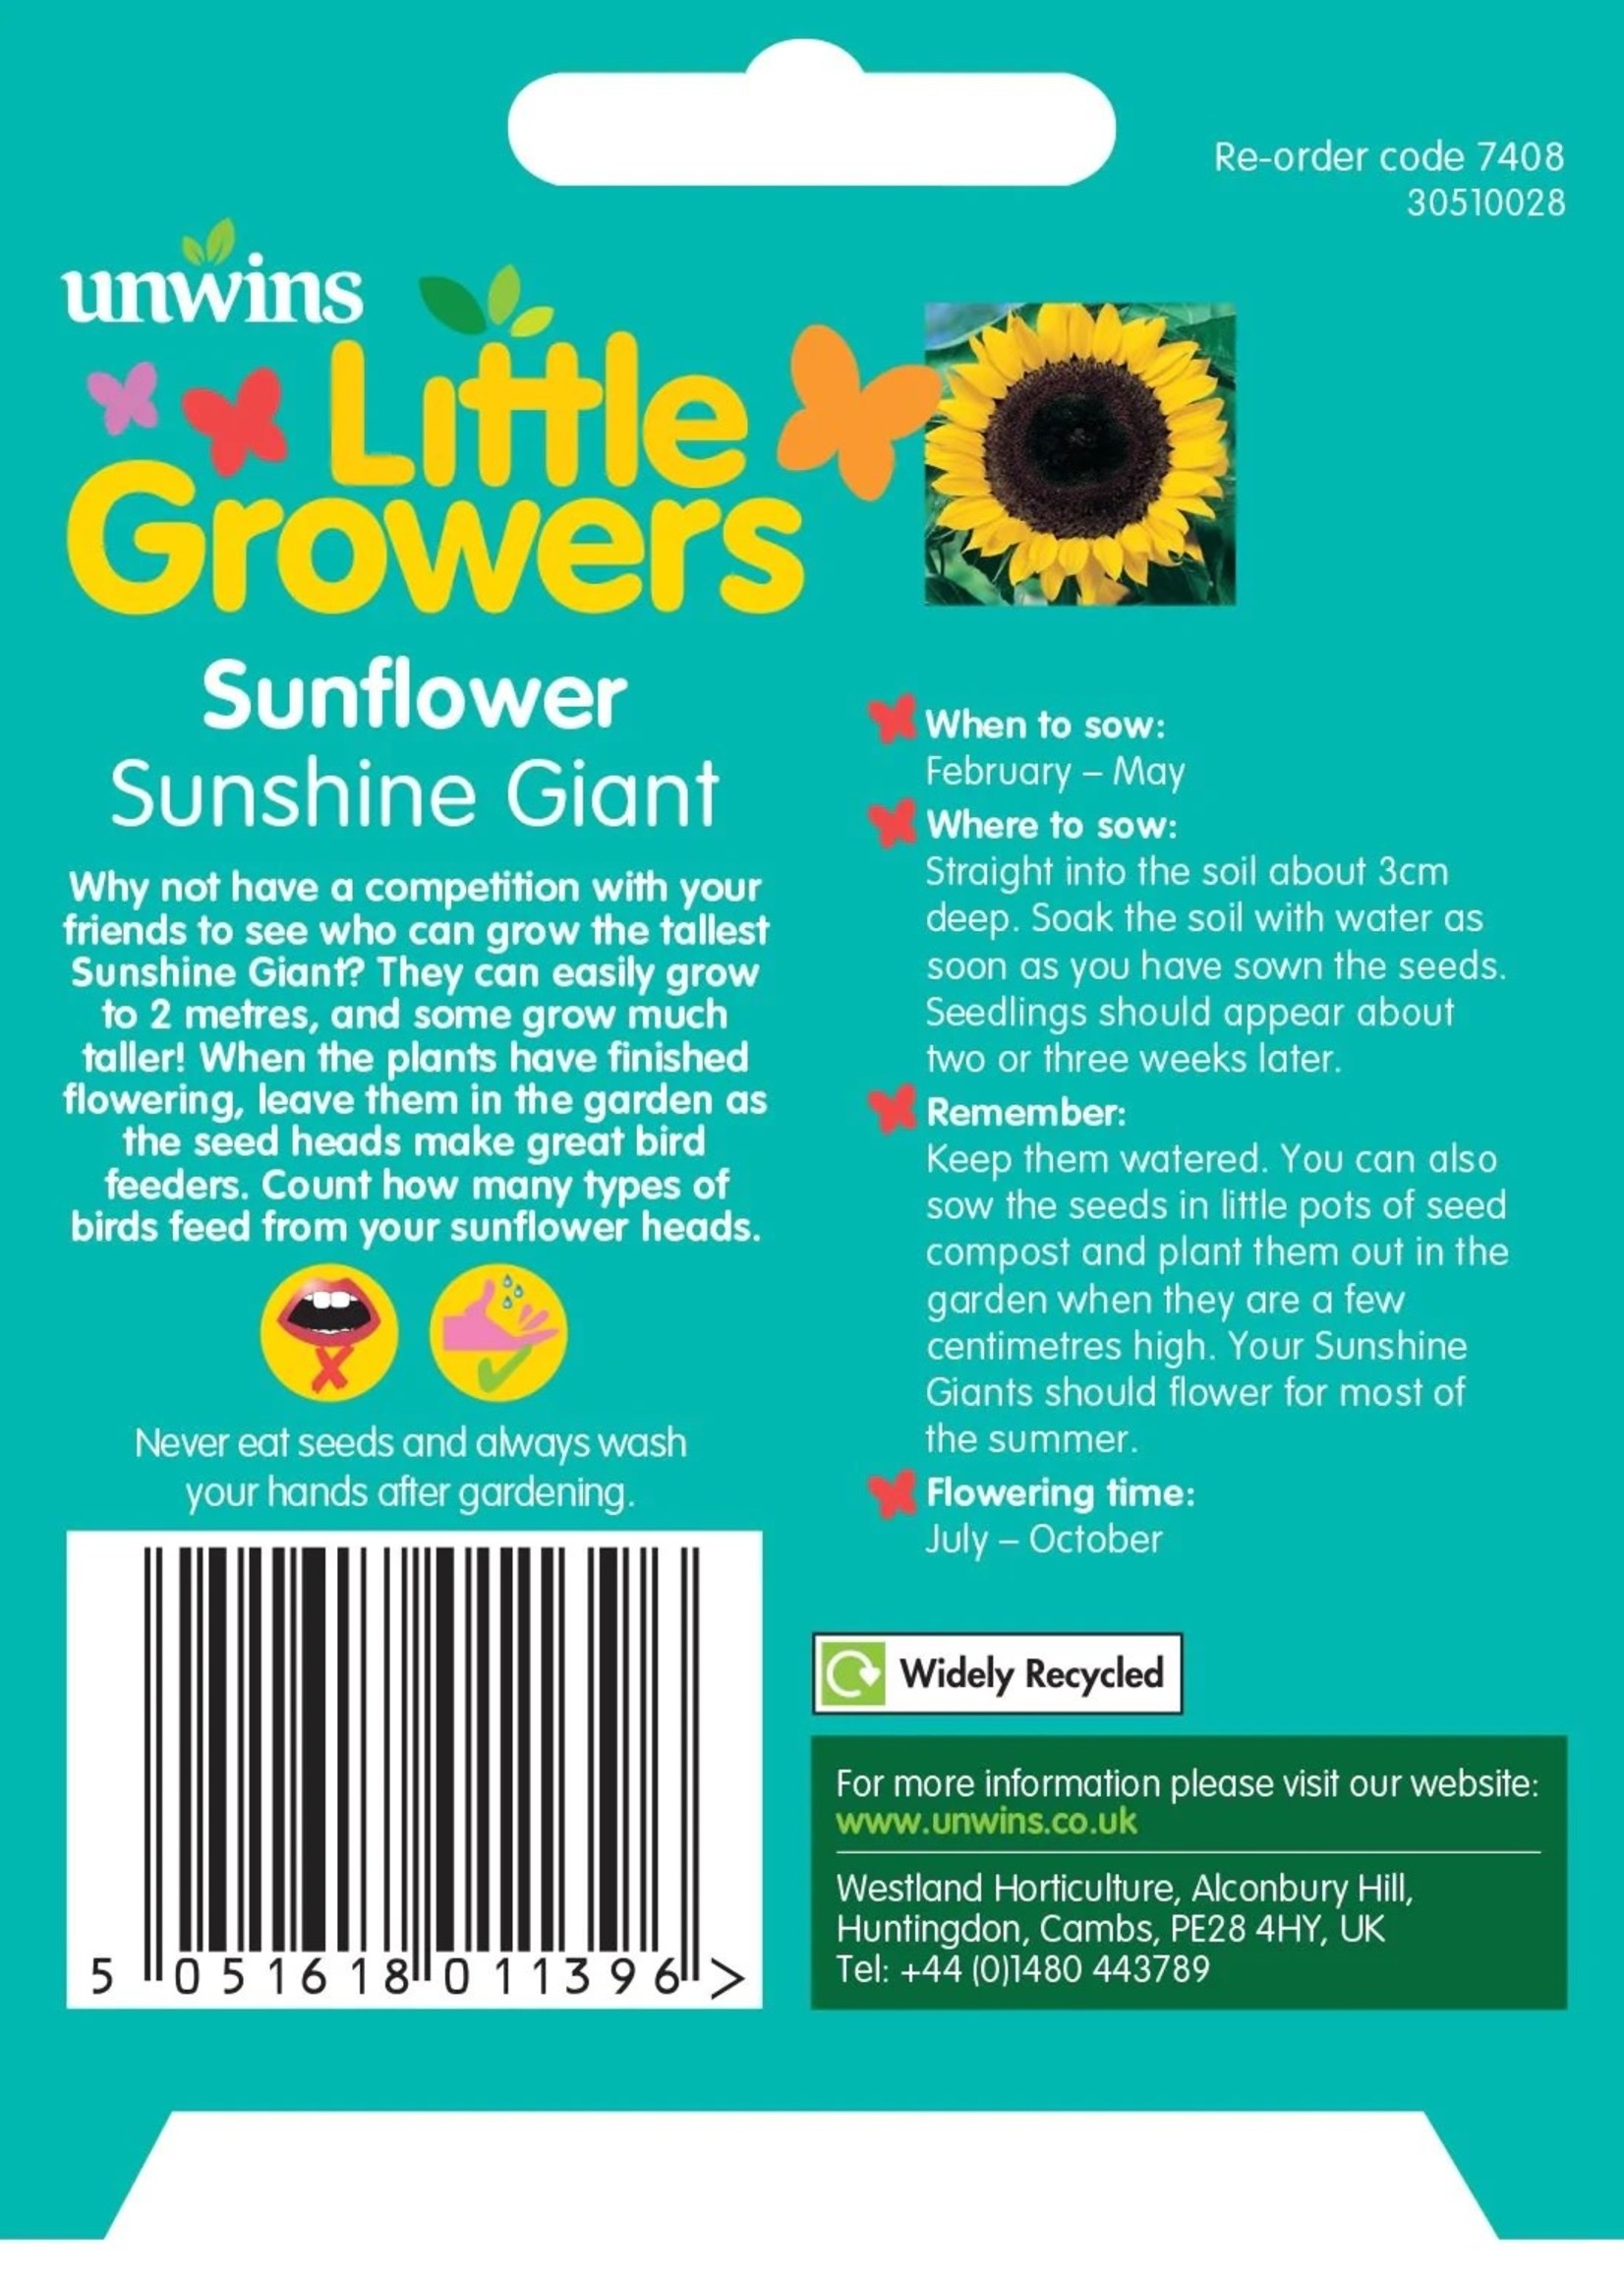 Unwins Little Growers - Sunflower Sunshine Giant